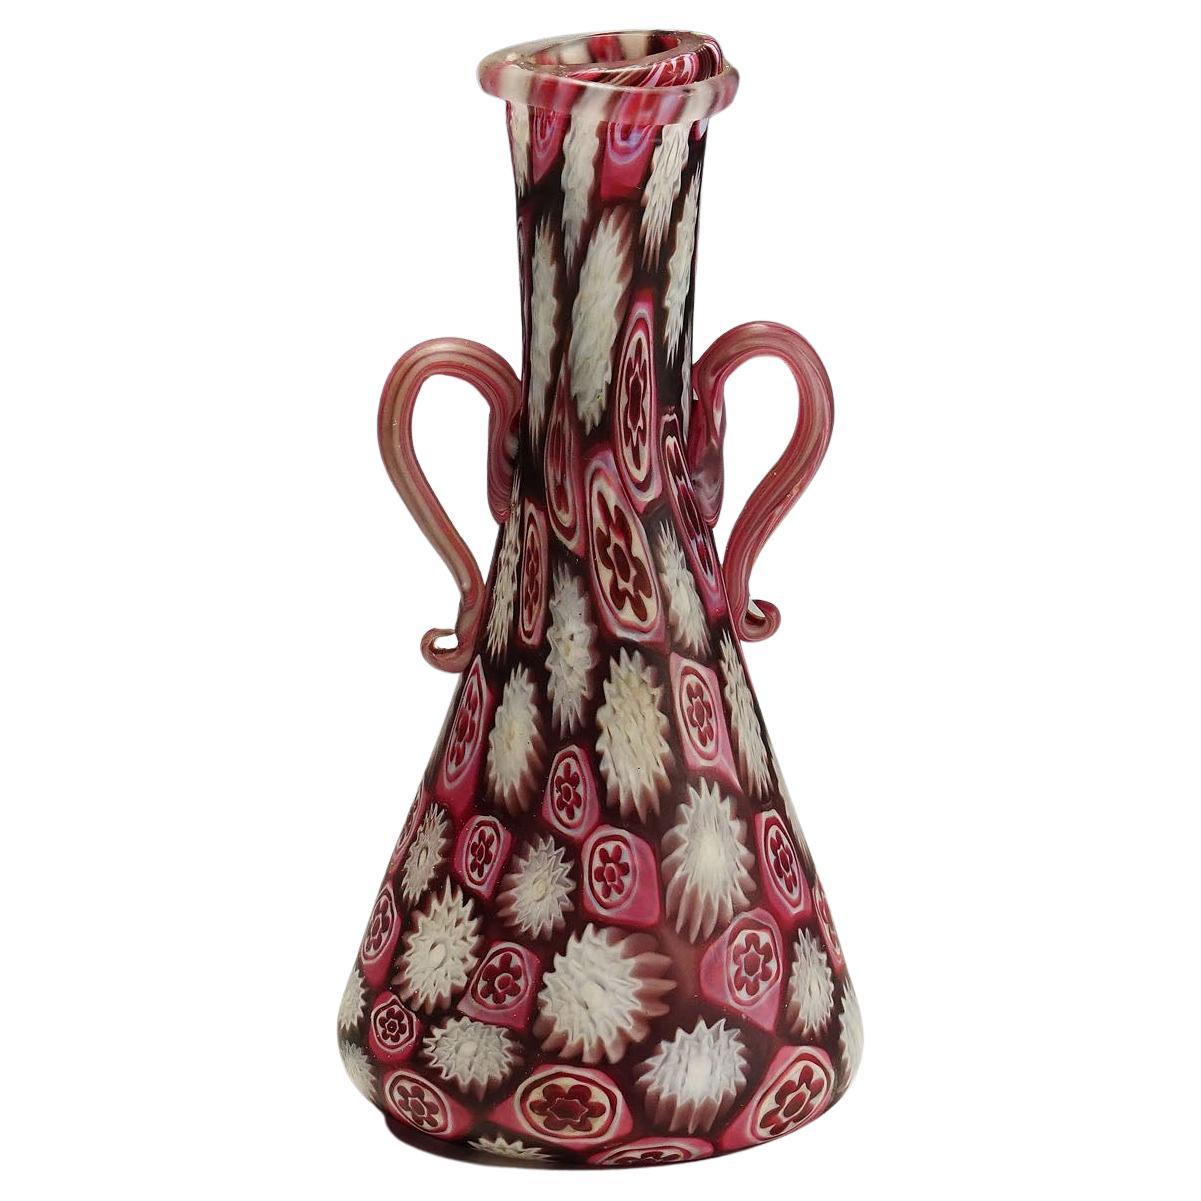 Antike rote und weiße Fratelli Toso Millefiori-Vase, Murano, um 1910